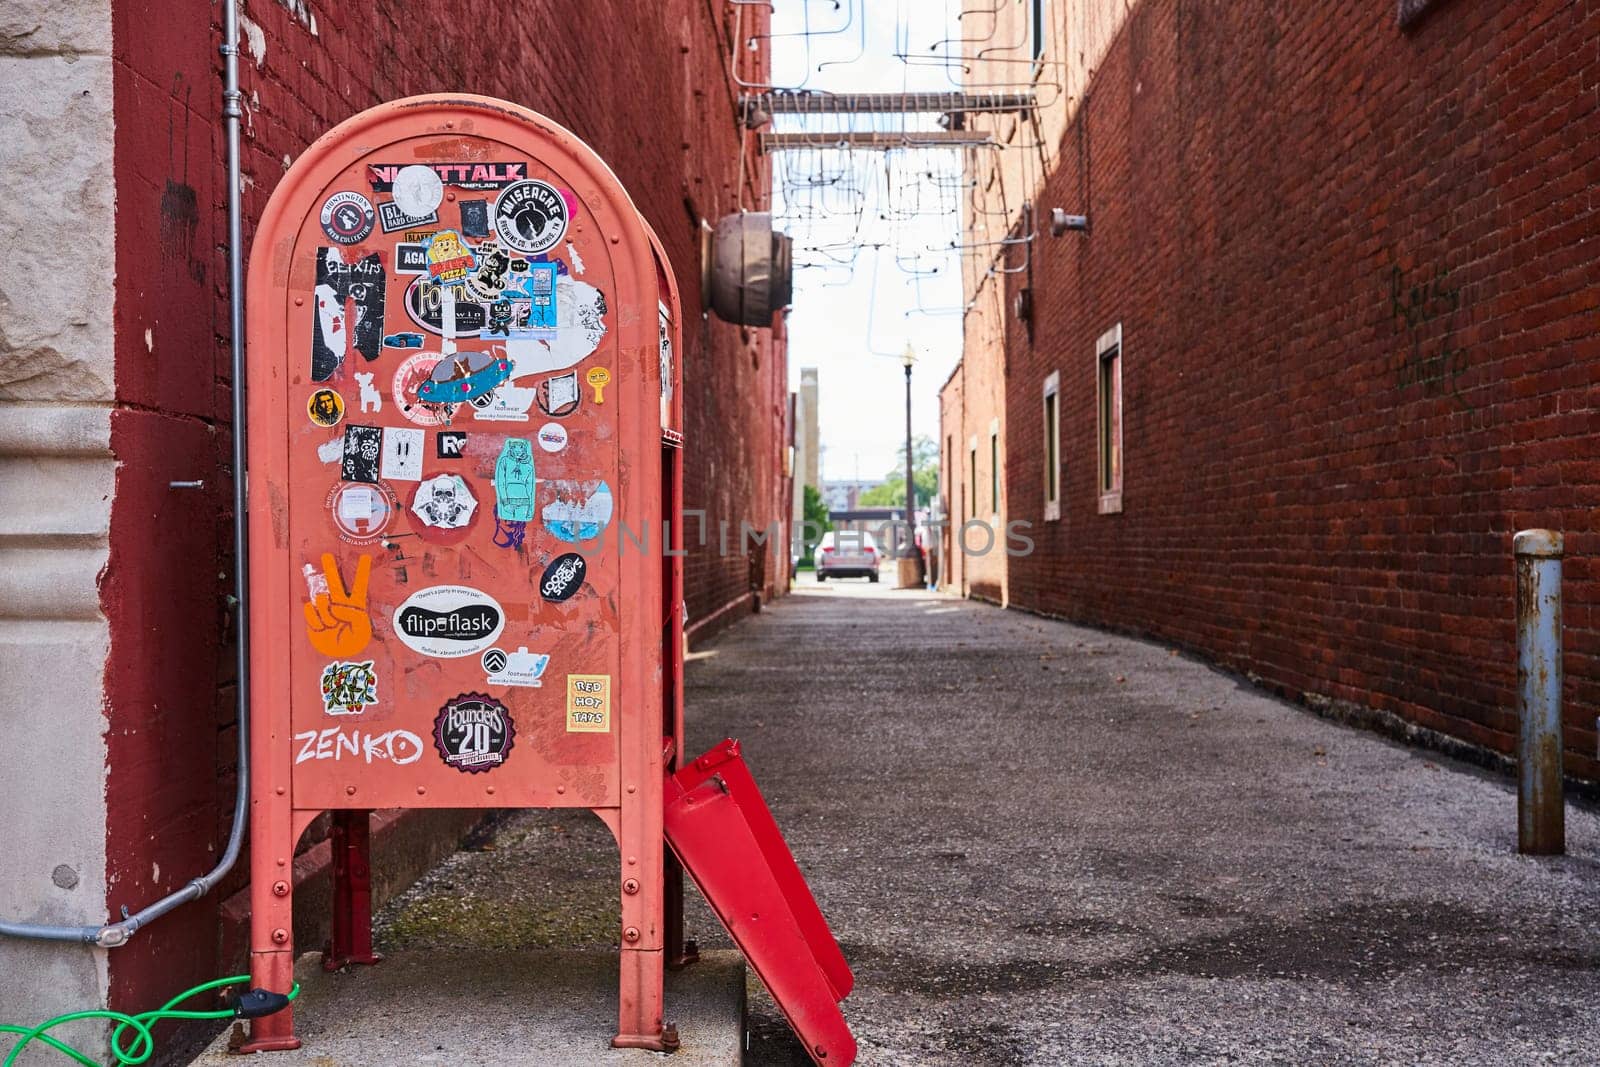 Daylight scene of weathered newspaper vending machine in a graffiti-adorned alleyway, Muncie, Indiana, 2023.